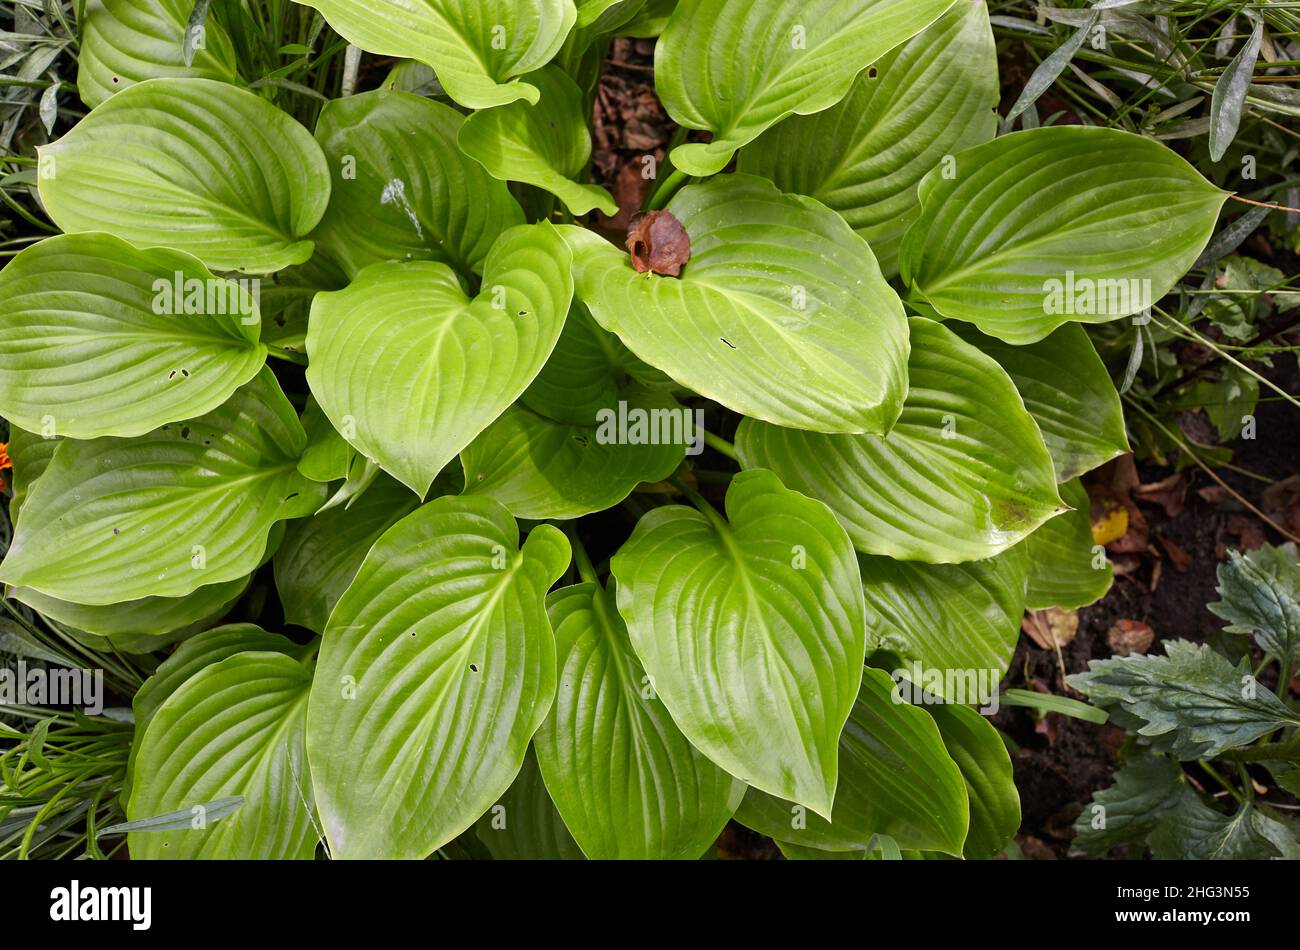 Beautiful Hosta leaves background. Hosta - an ornamental plant for ...